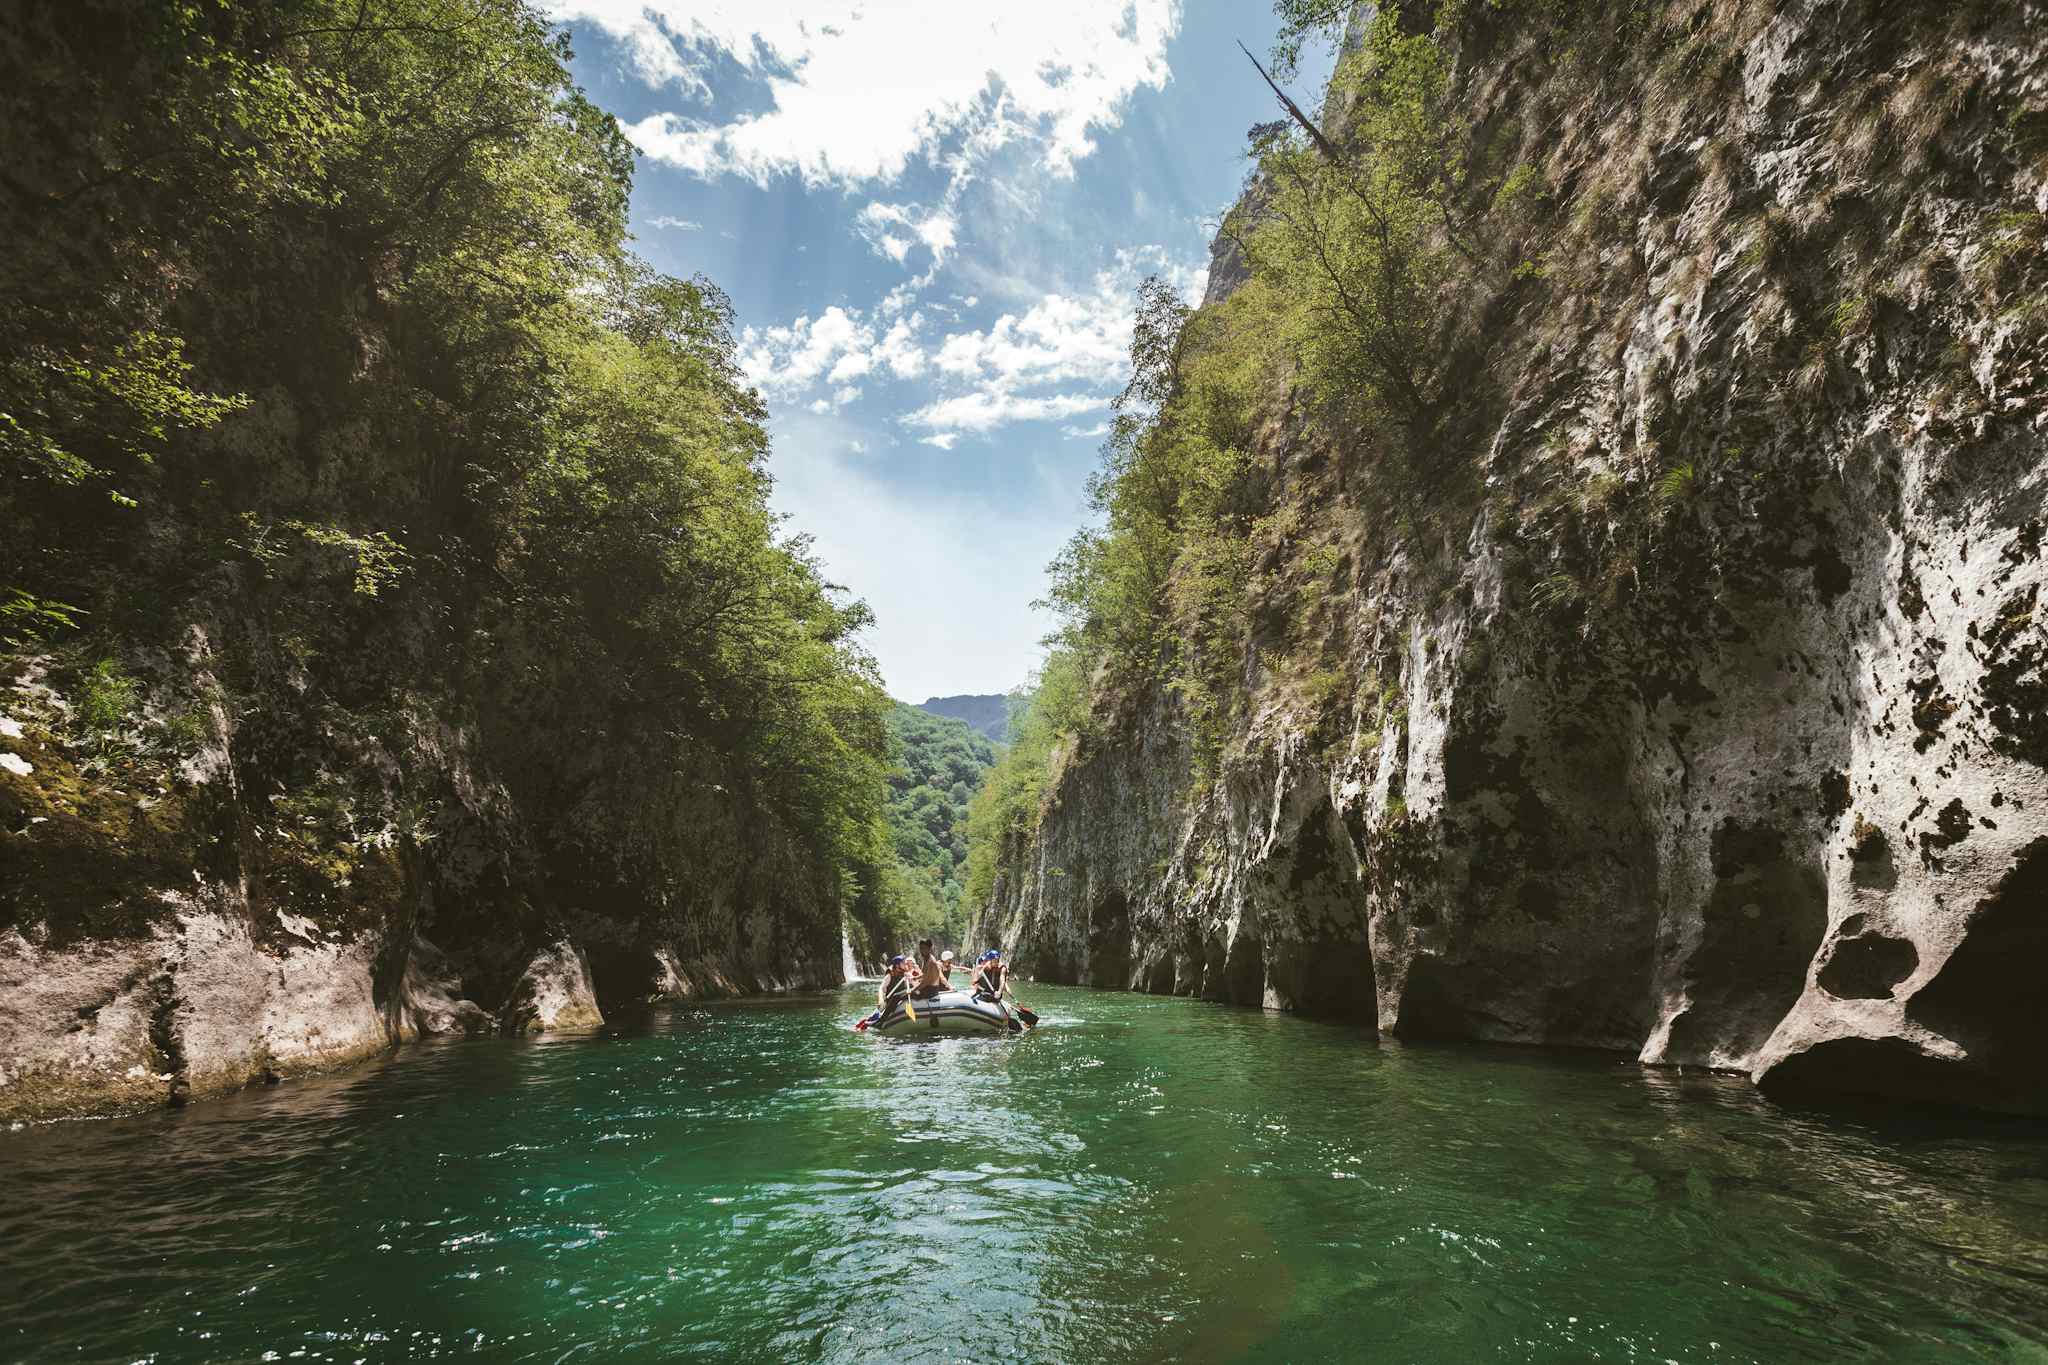 Raft, Hike and Canyon in Bosnia